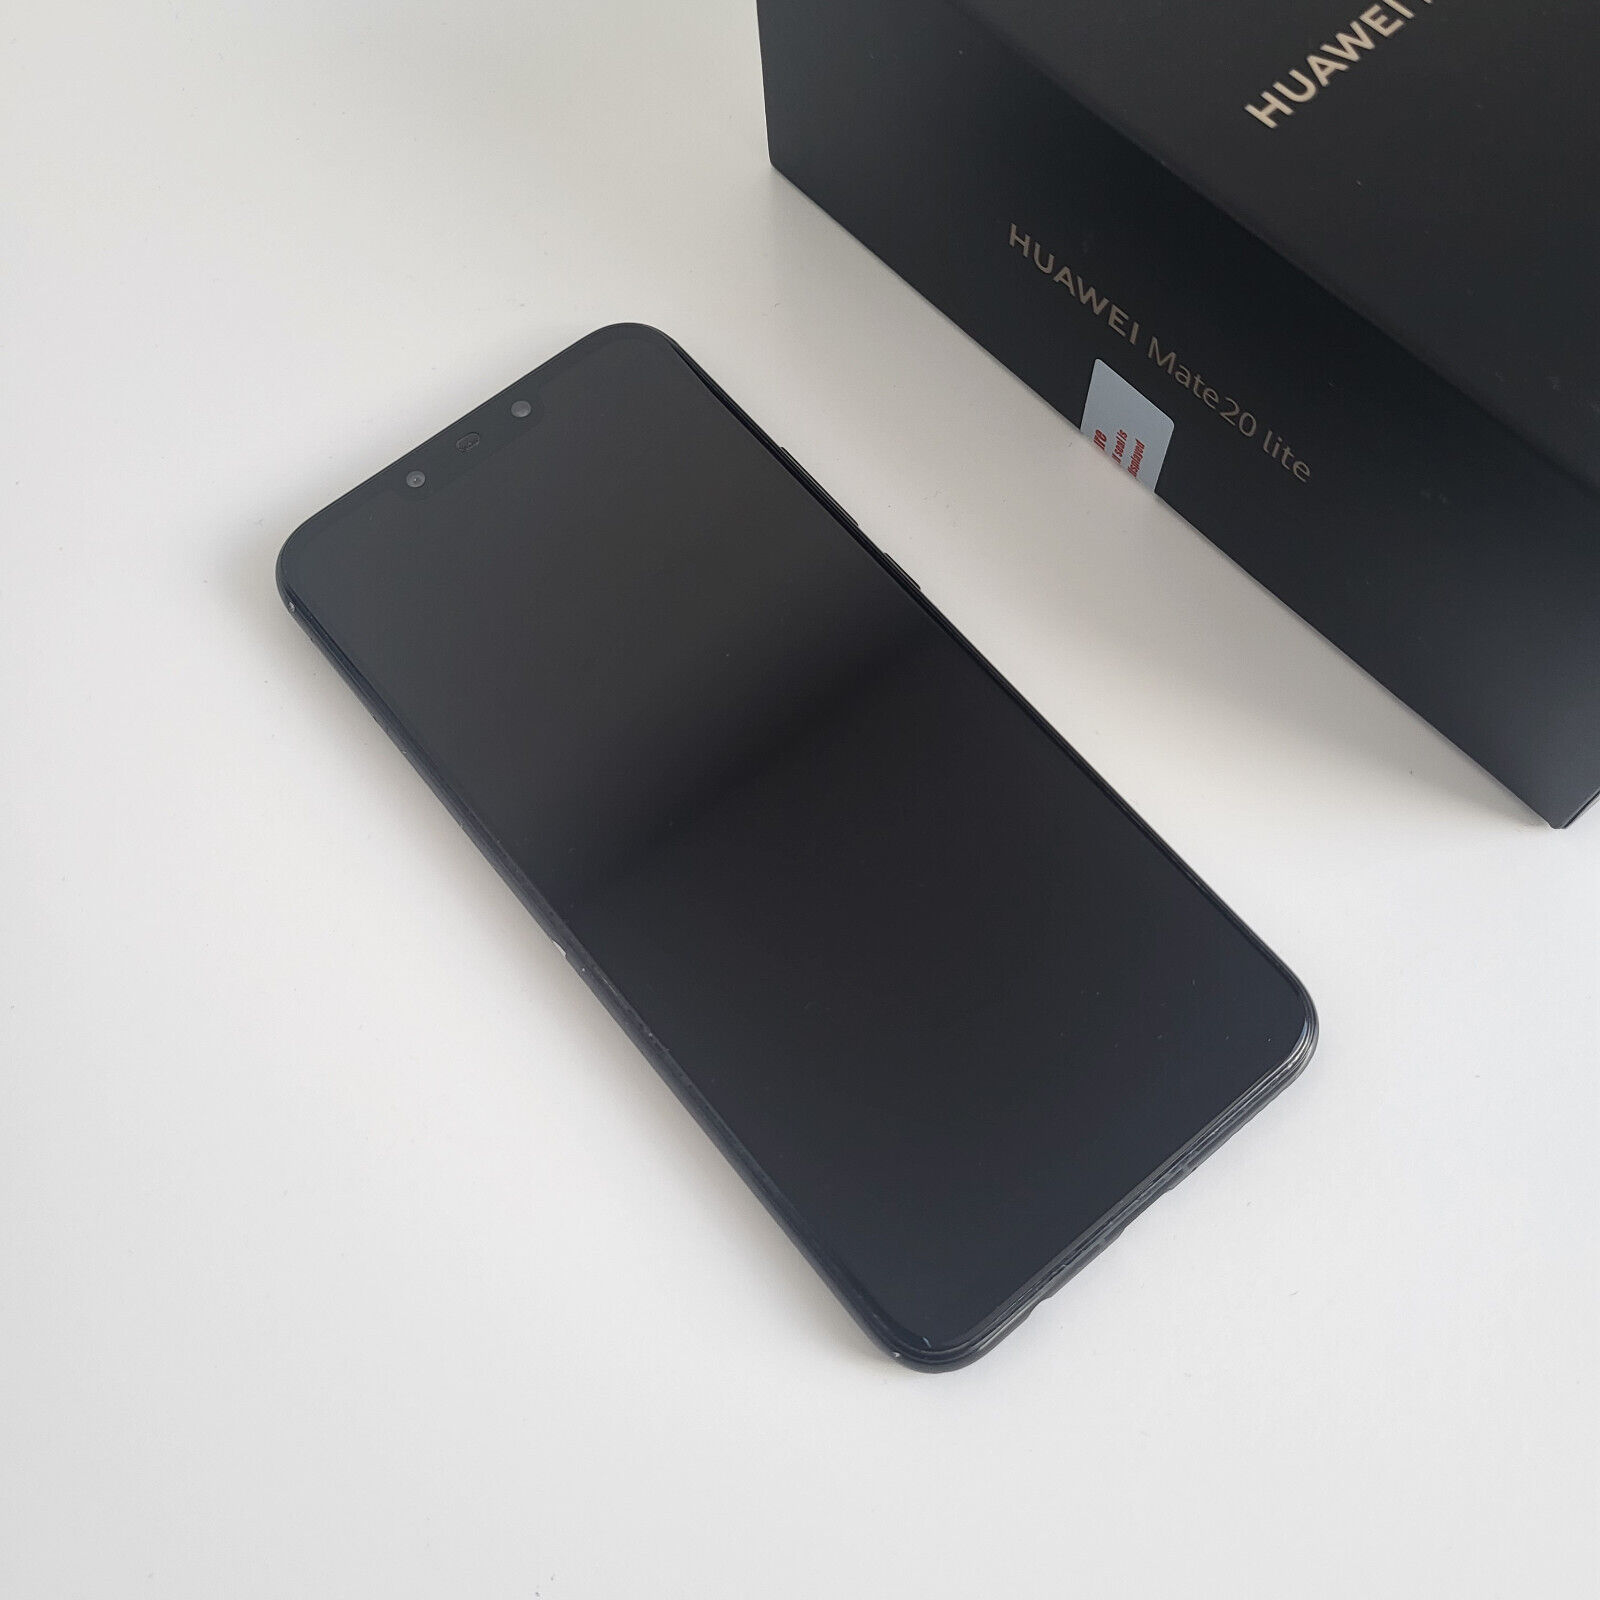 Huawei Mate 20 Lite 64 GB schwarz 4 GB RAM Android-Smartphone mit entsperrter Version, Dual-SIM-Karte